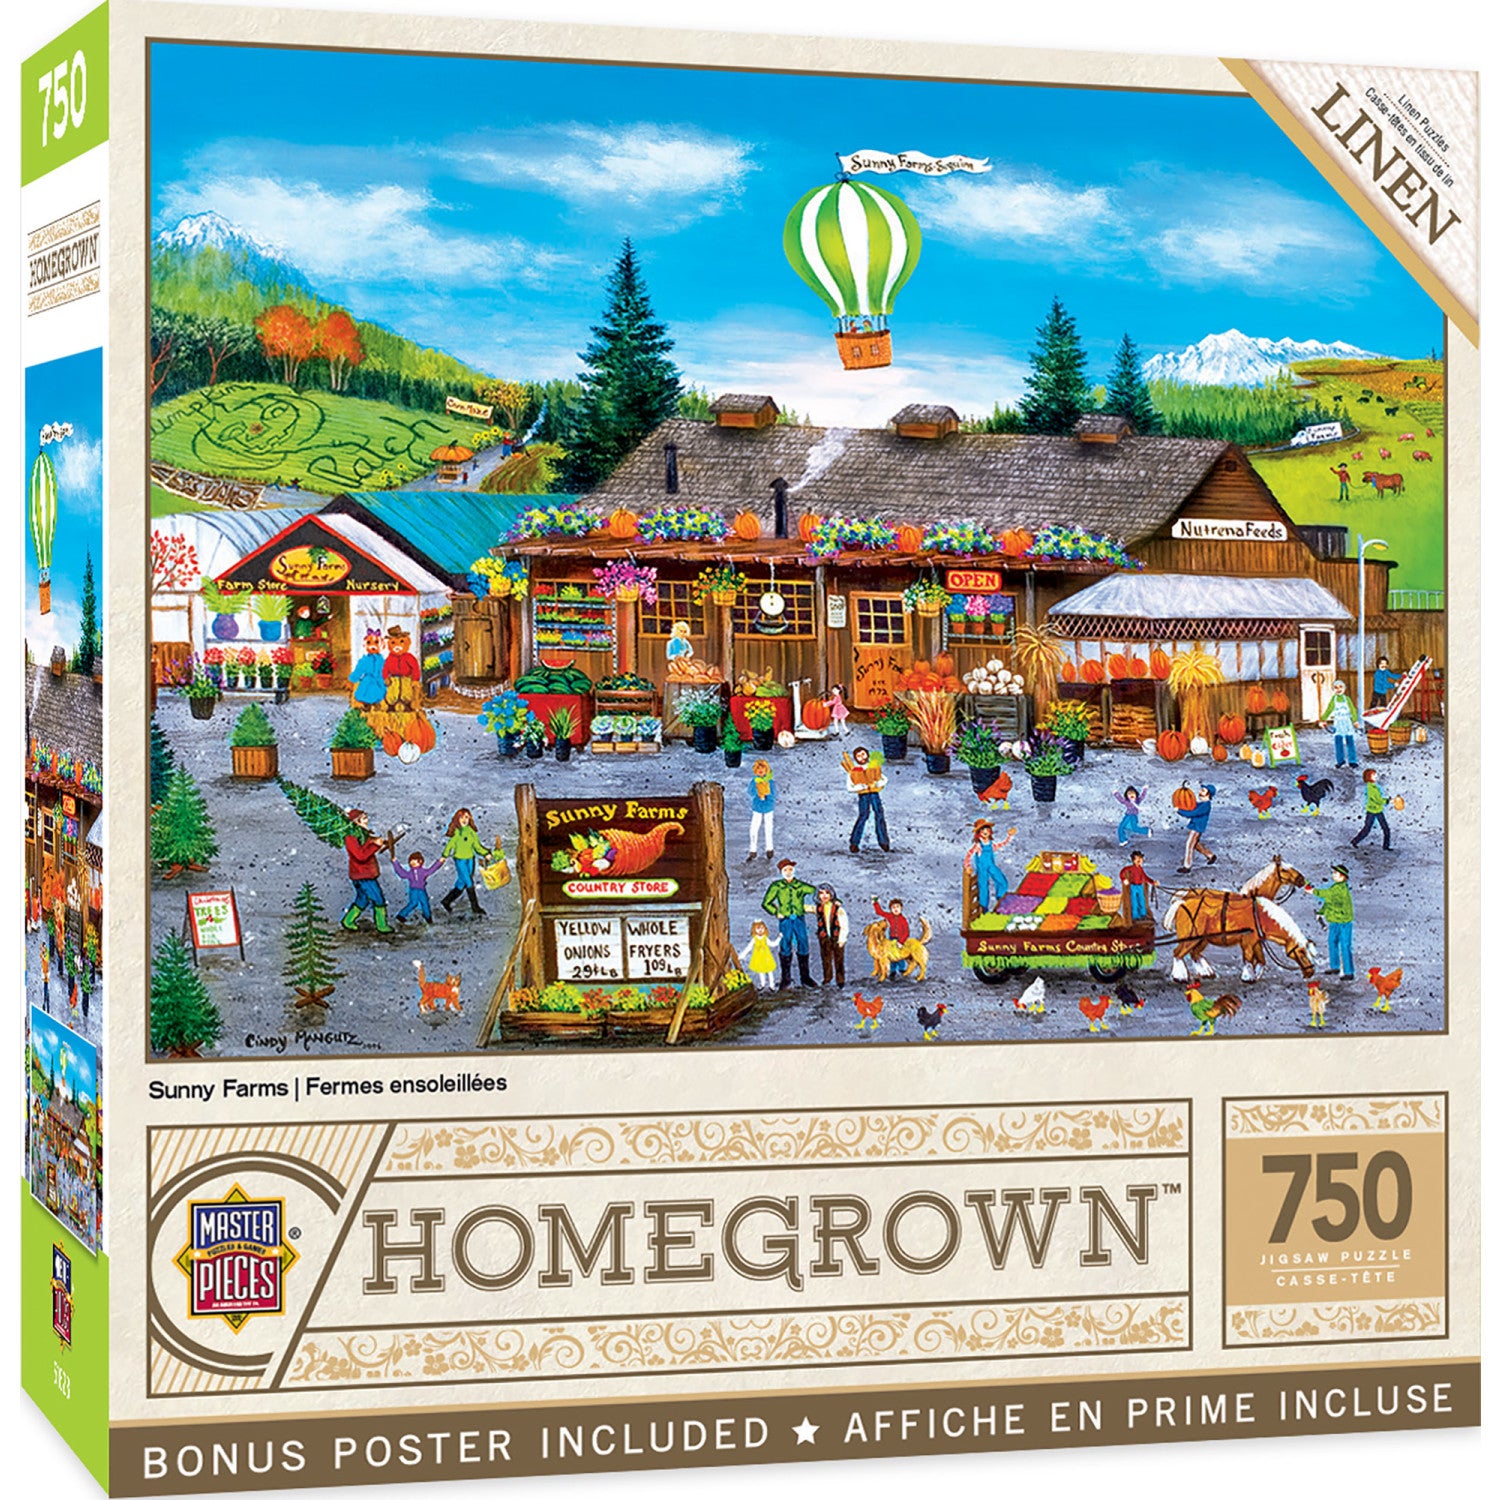 Homegrown - Sunny Farms 750 Piece Jigsaw Puzzle